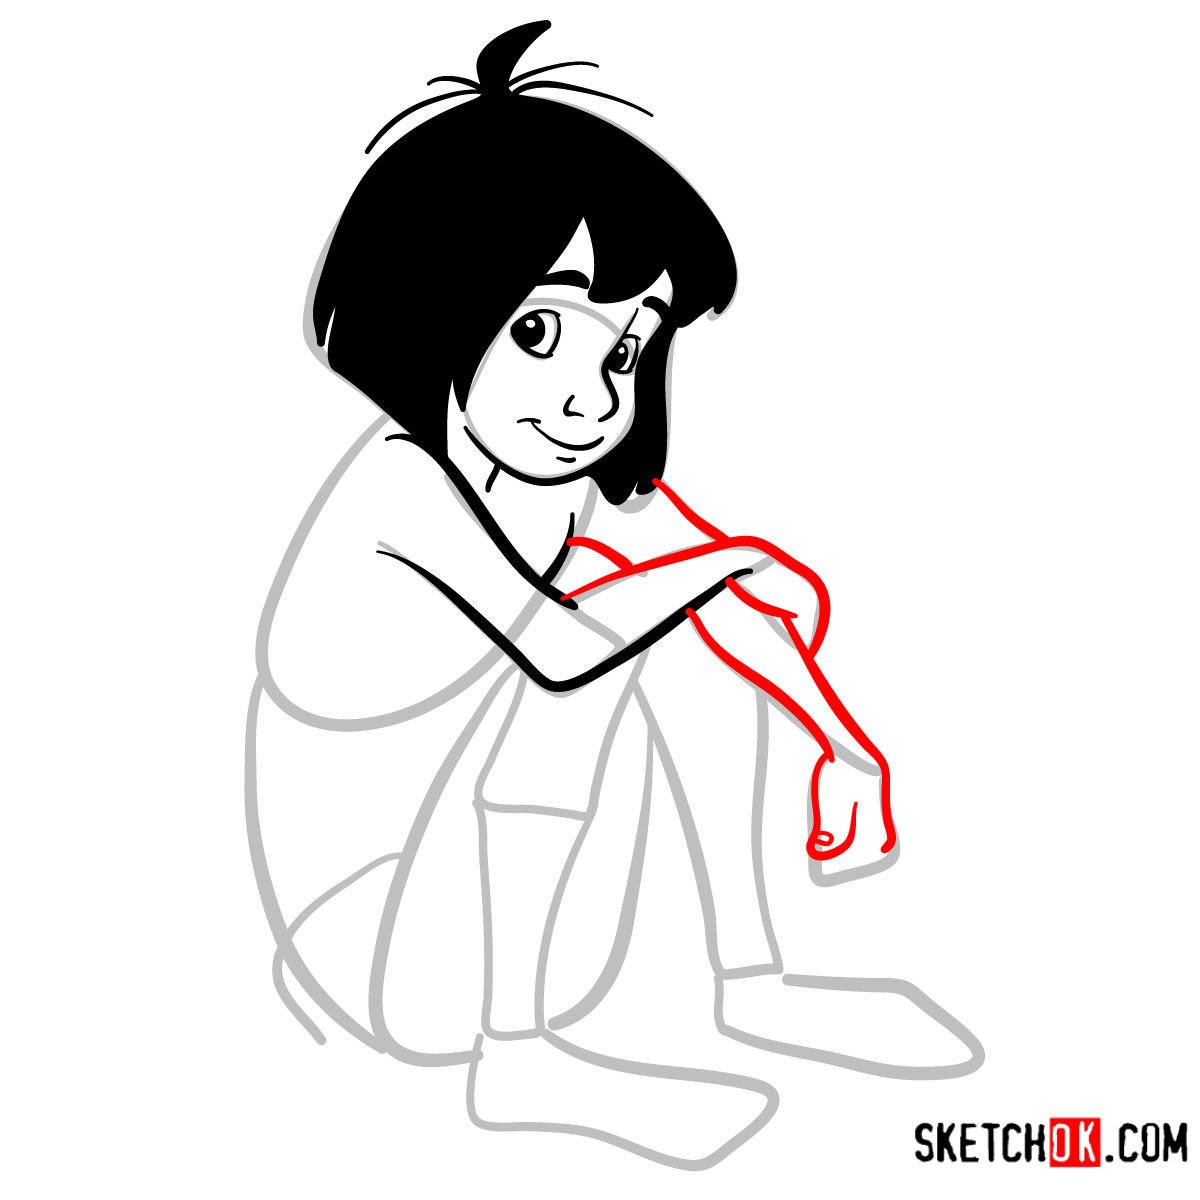 How to draw Mowgli | The Jungle Book - step 07